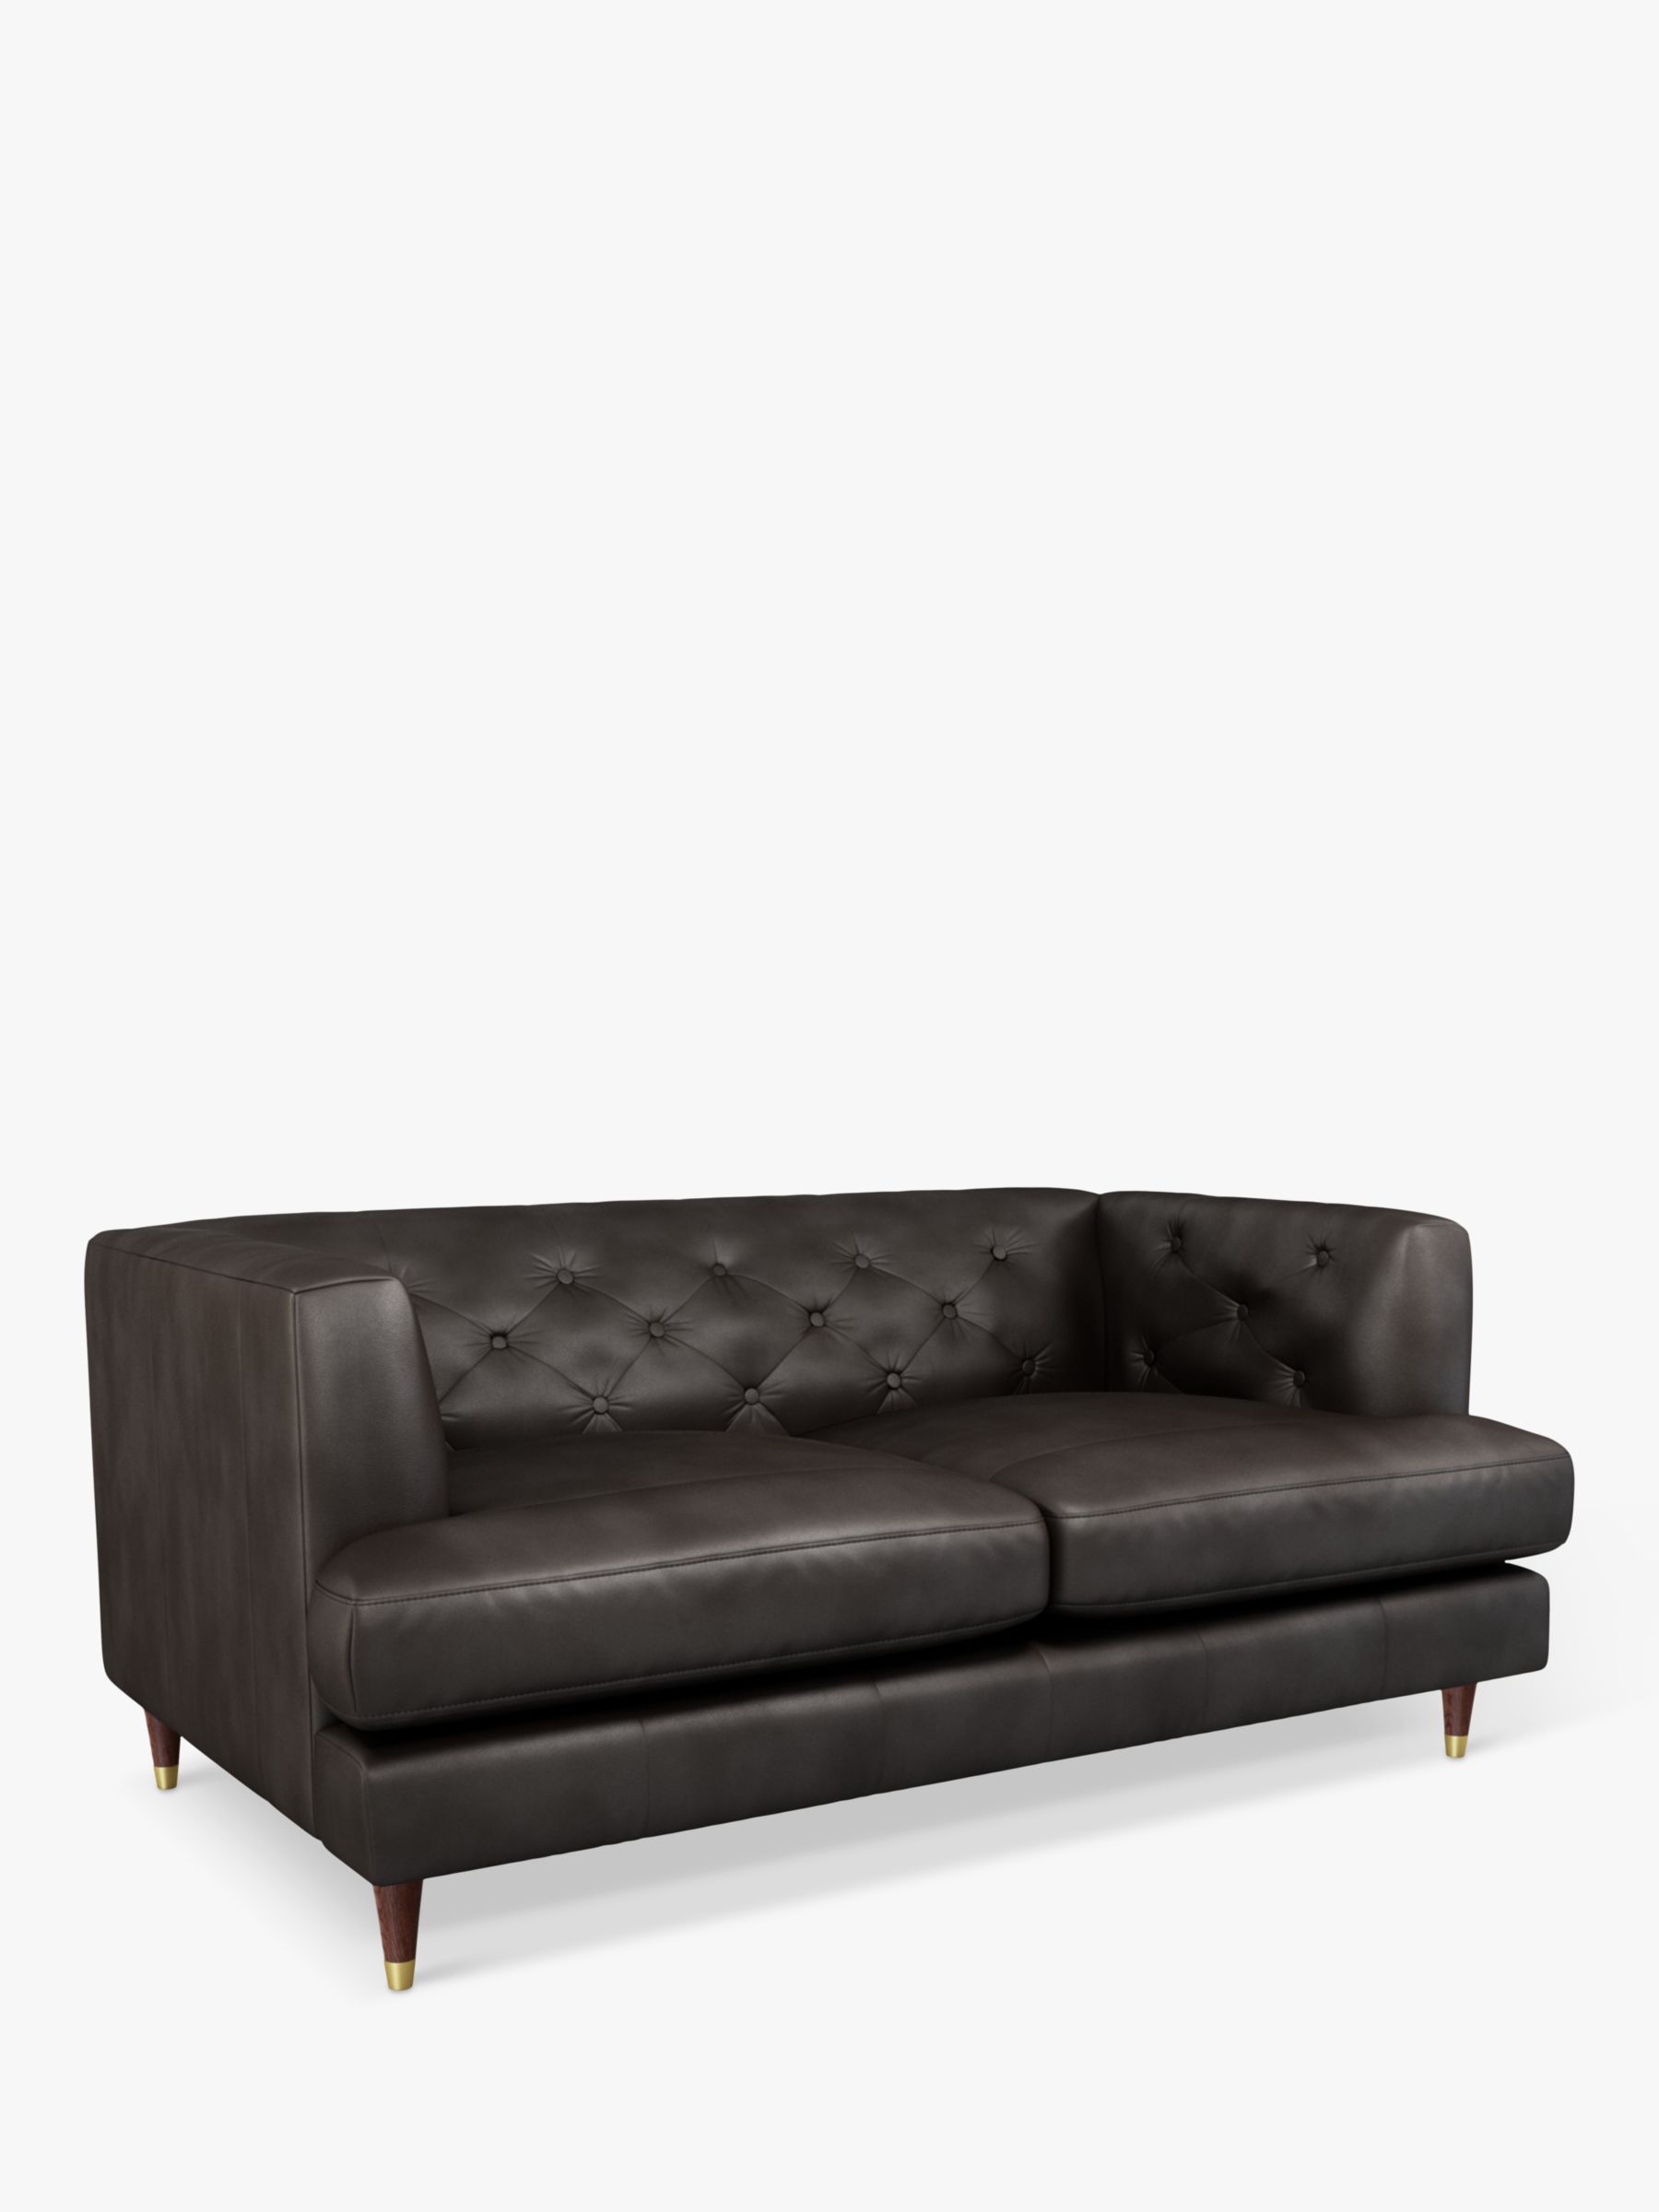 Photo of John lewis chester medium 2 seater leather sofa dark leg